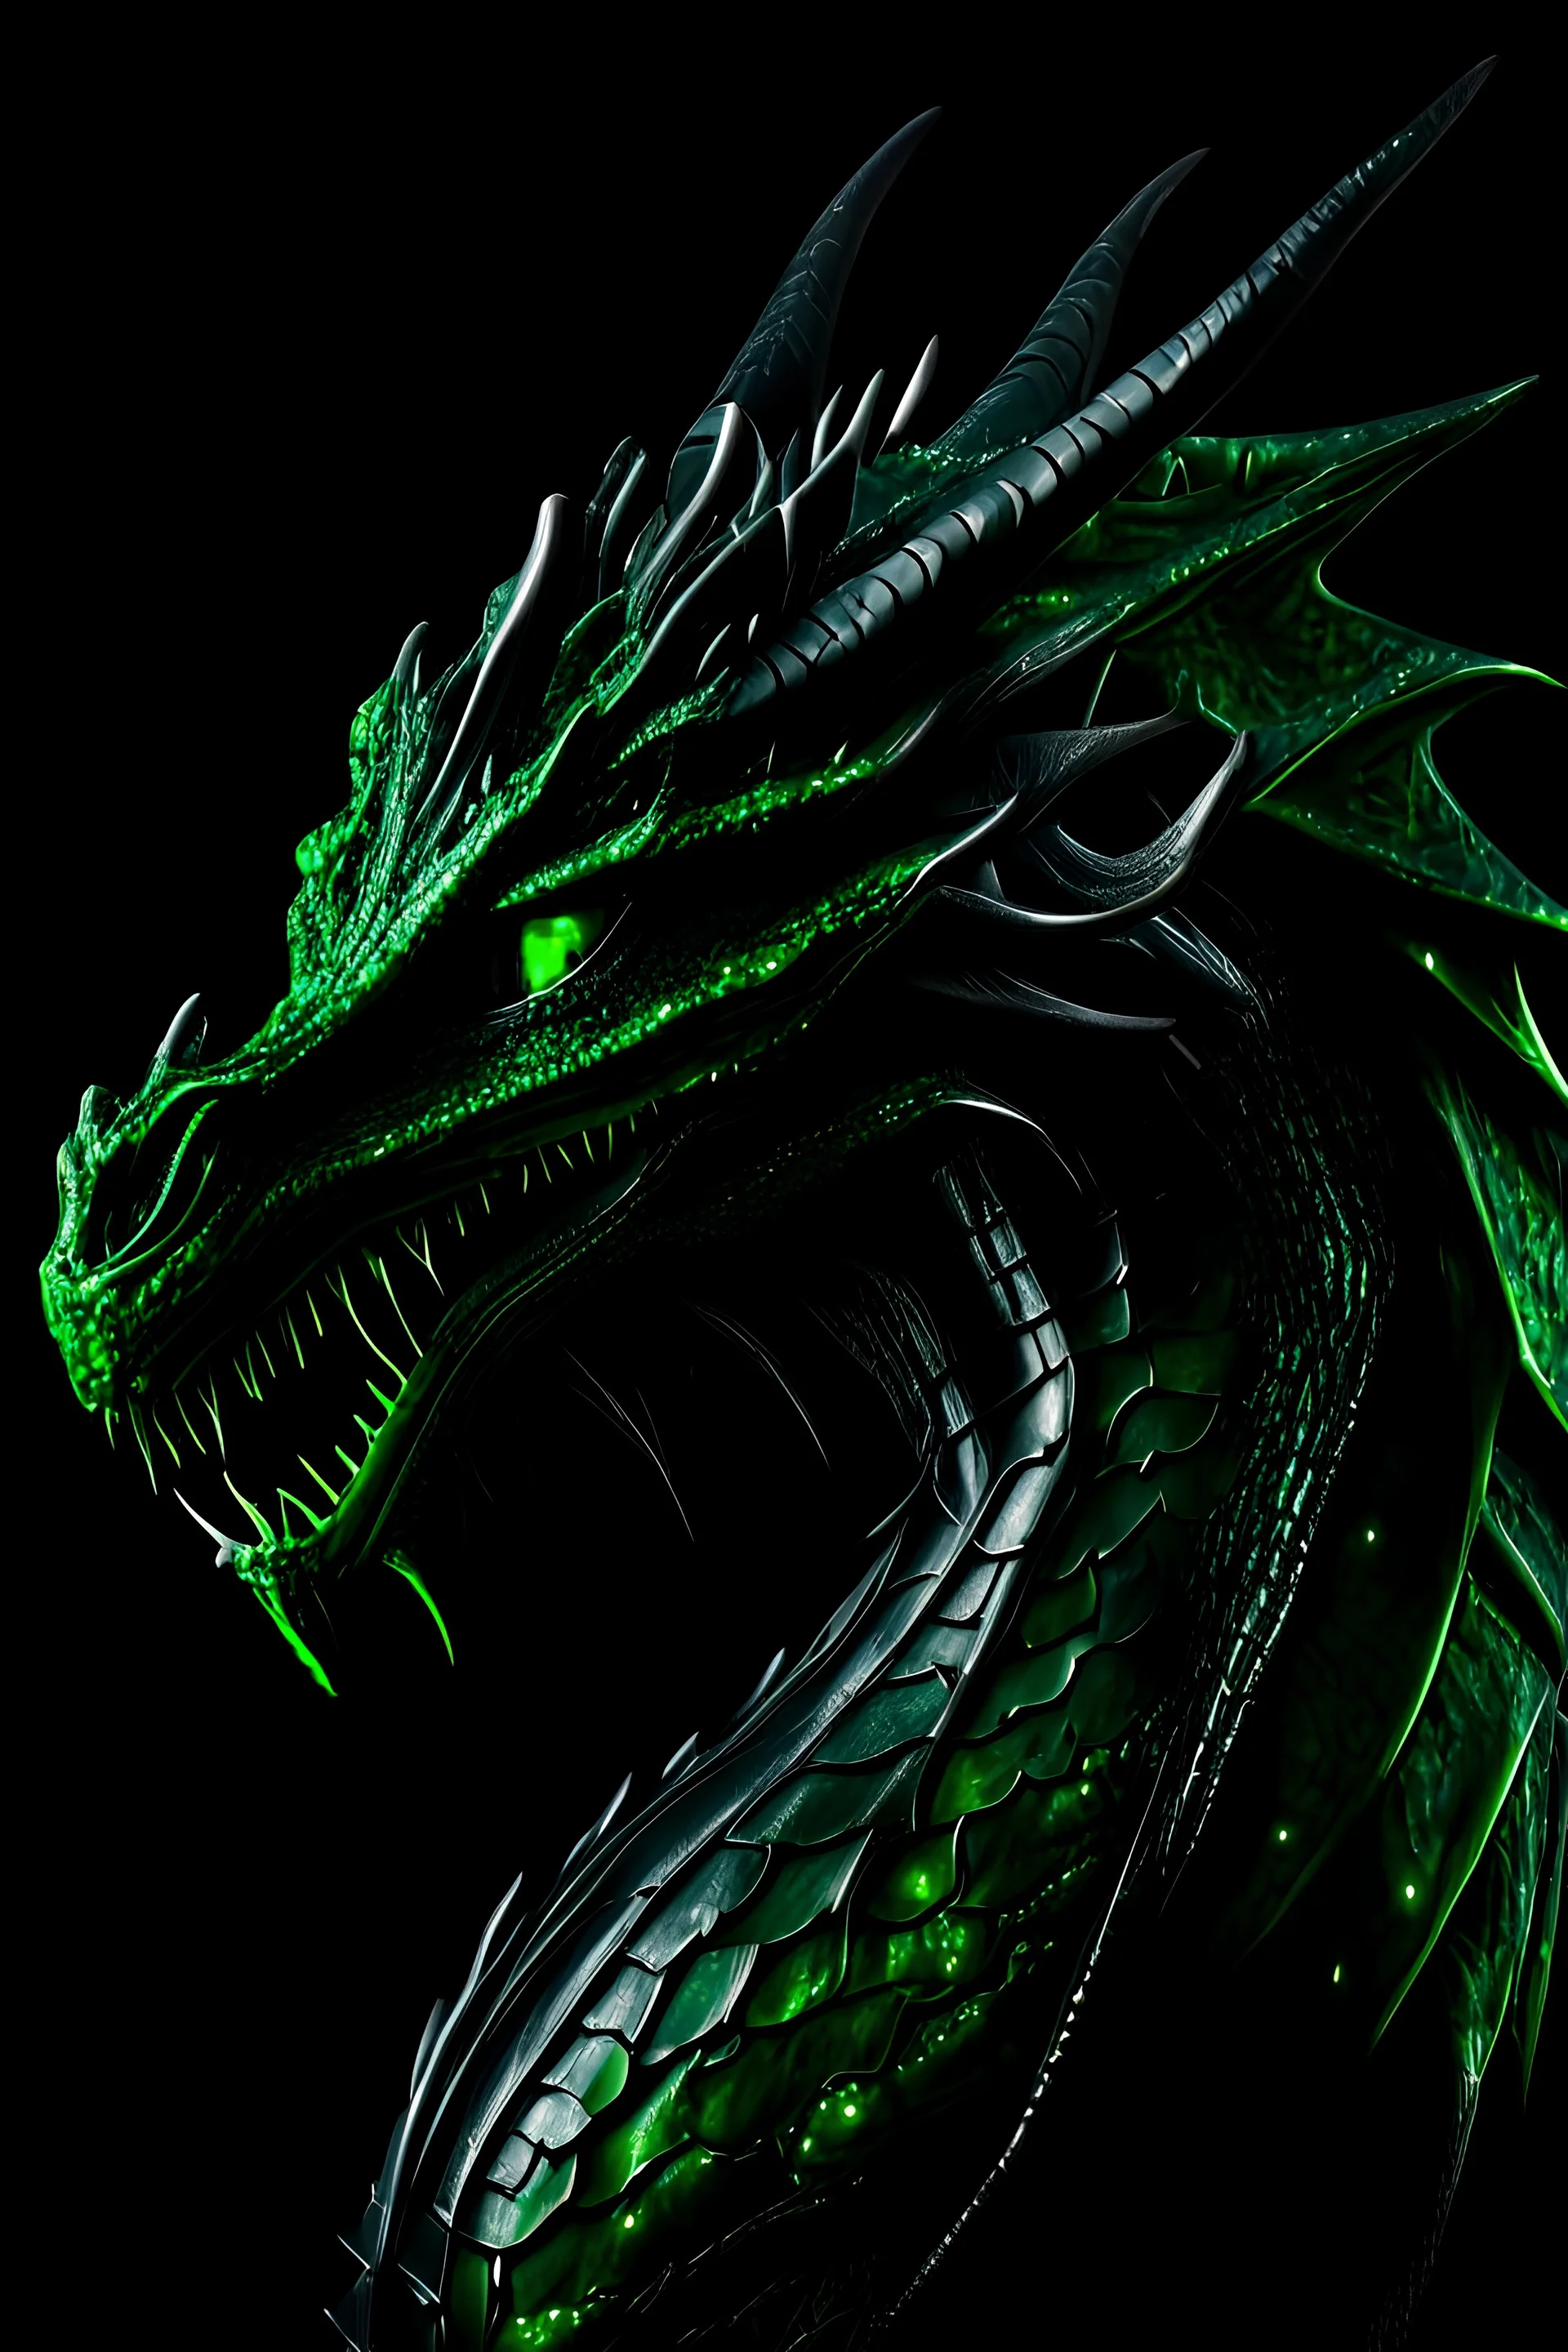 Earth emerald dragon in black backdrop, high detail 8k